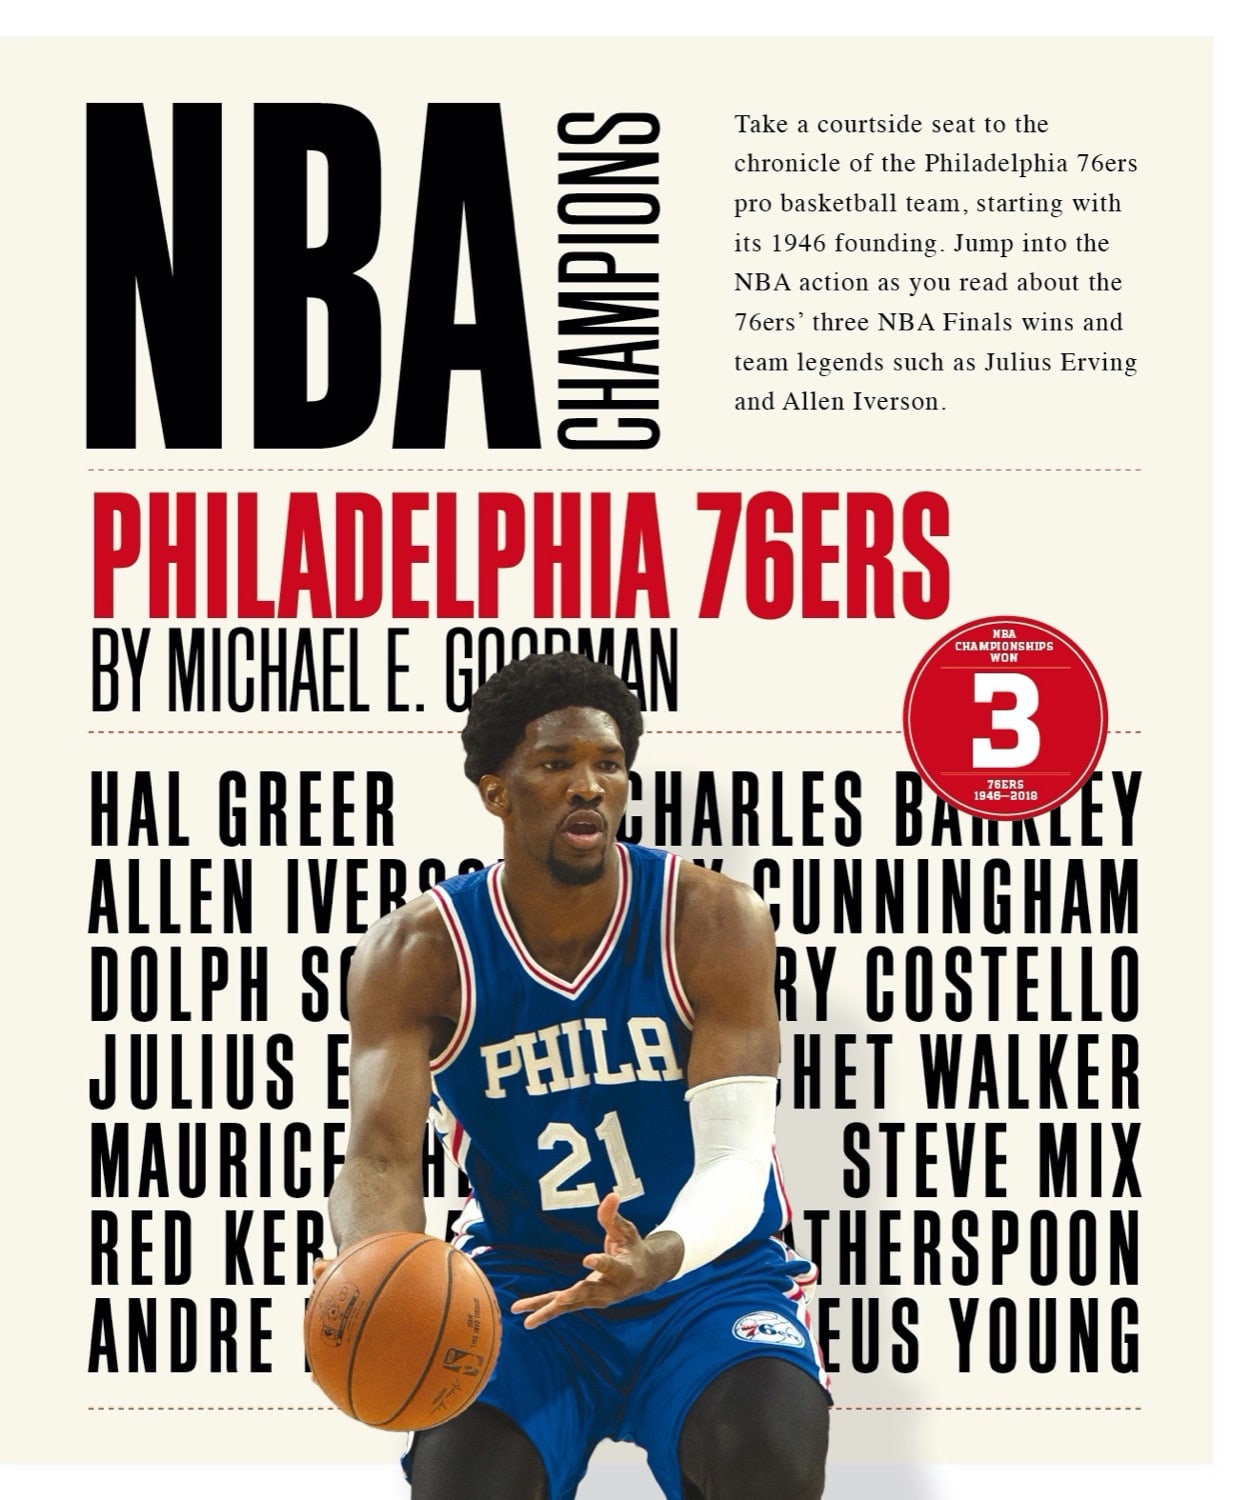 Philadelphia 76ers NBA Playoff gear: How to shop for shirts, jerseys 